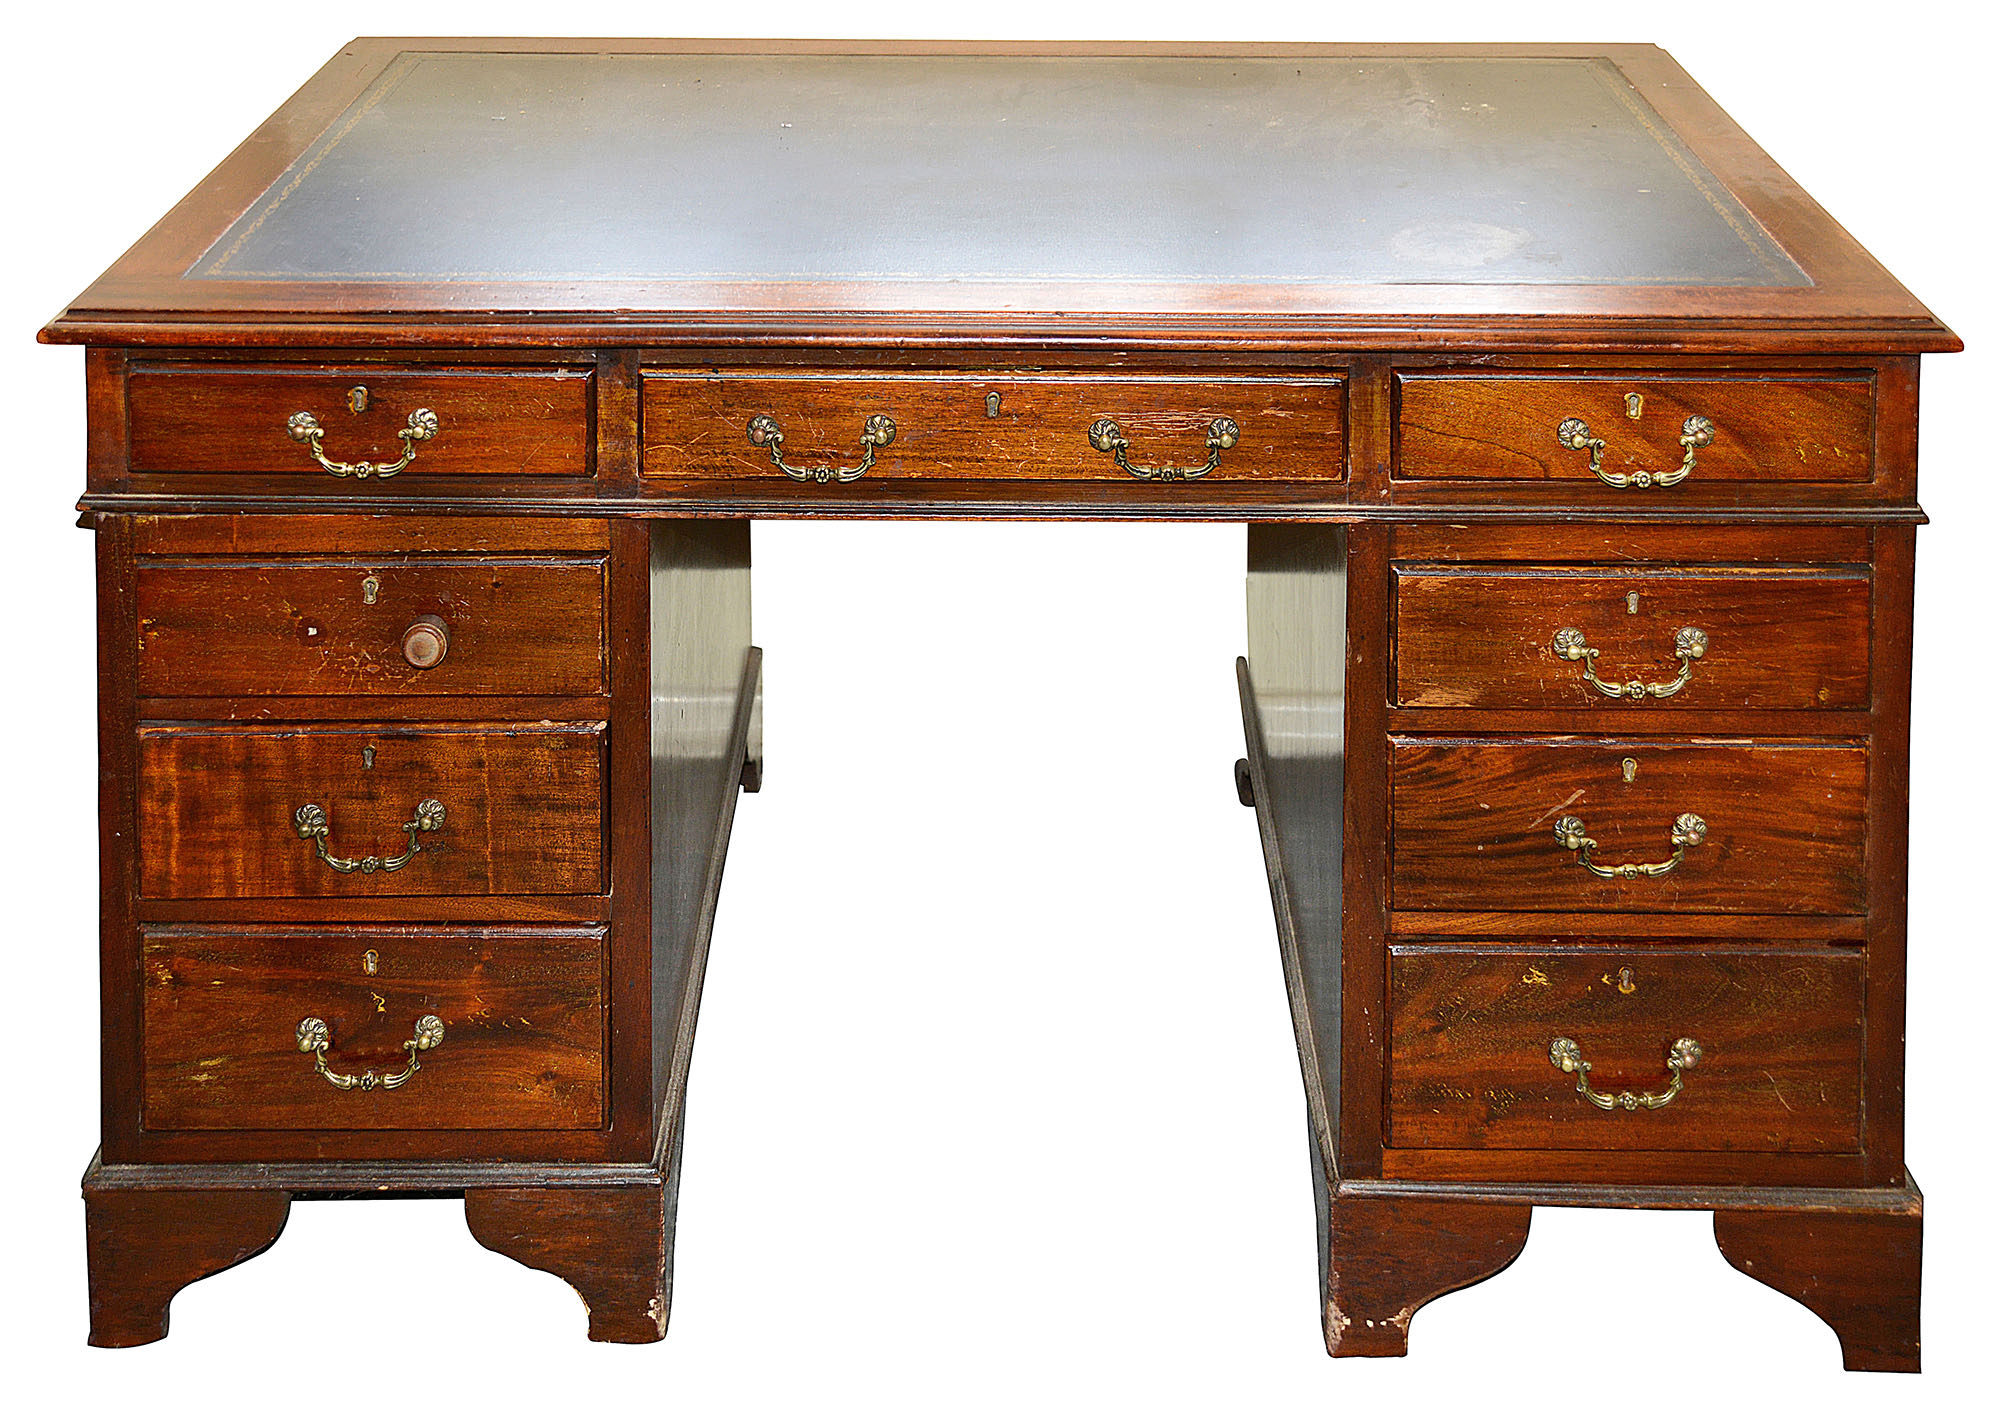 A large Victorian mahogany twin pedestal desk